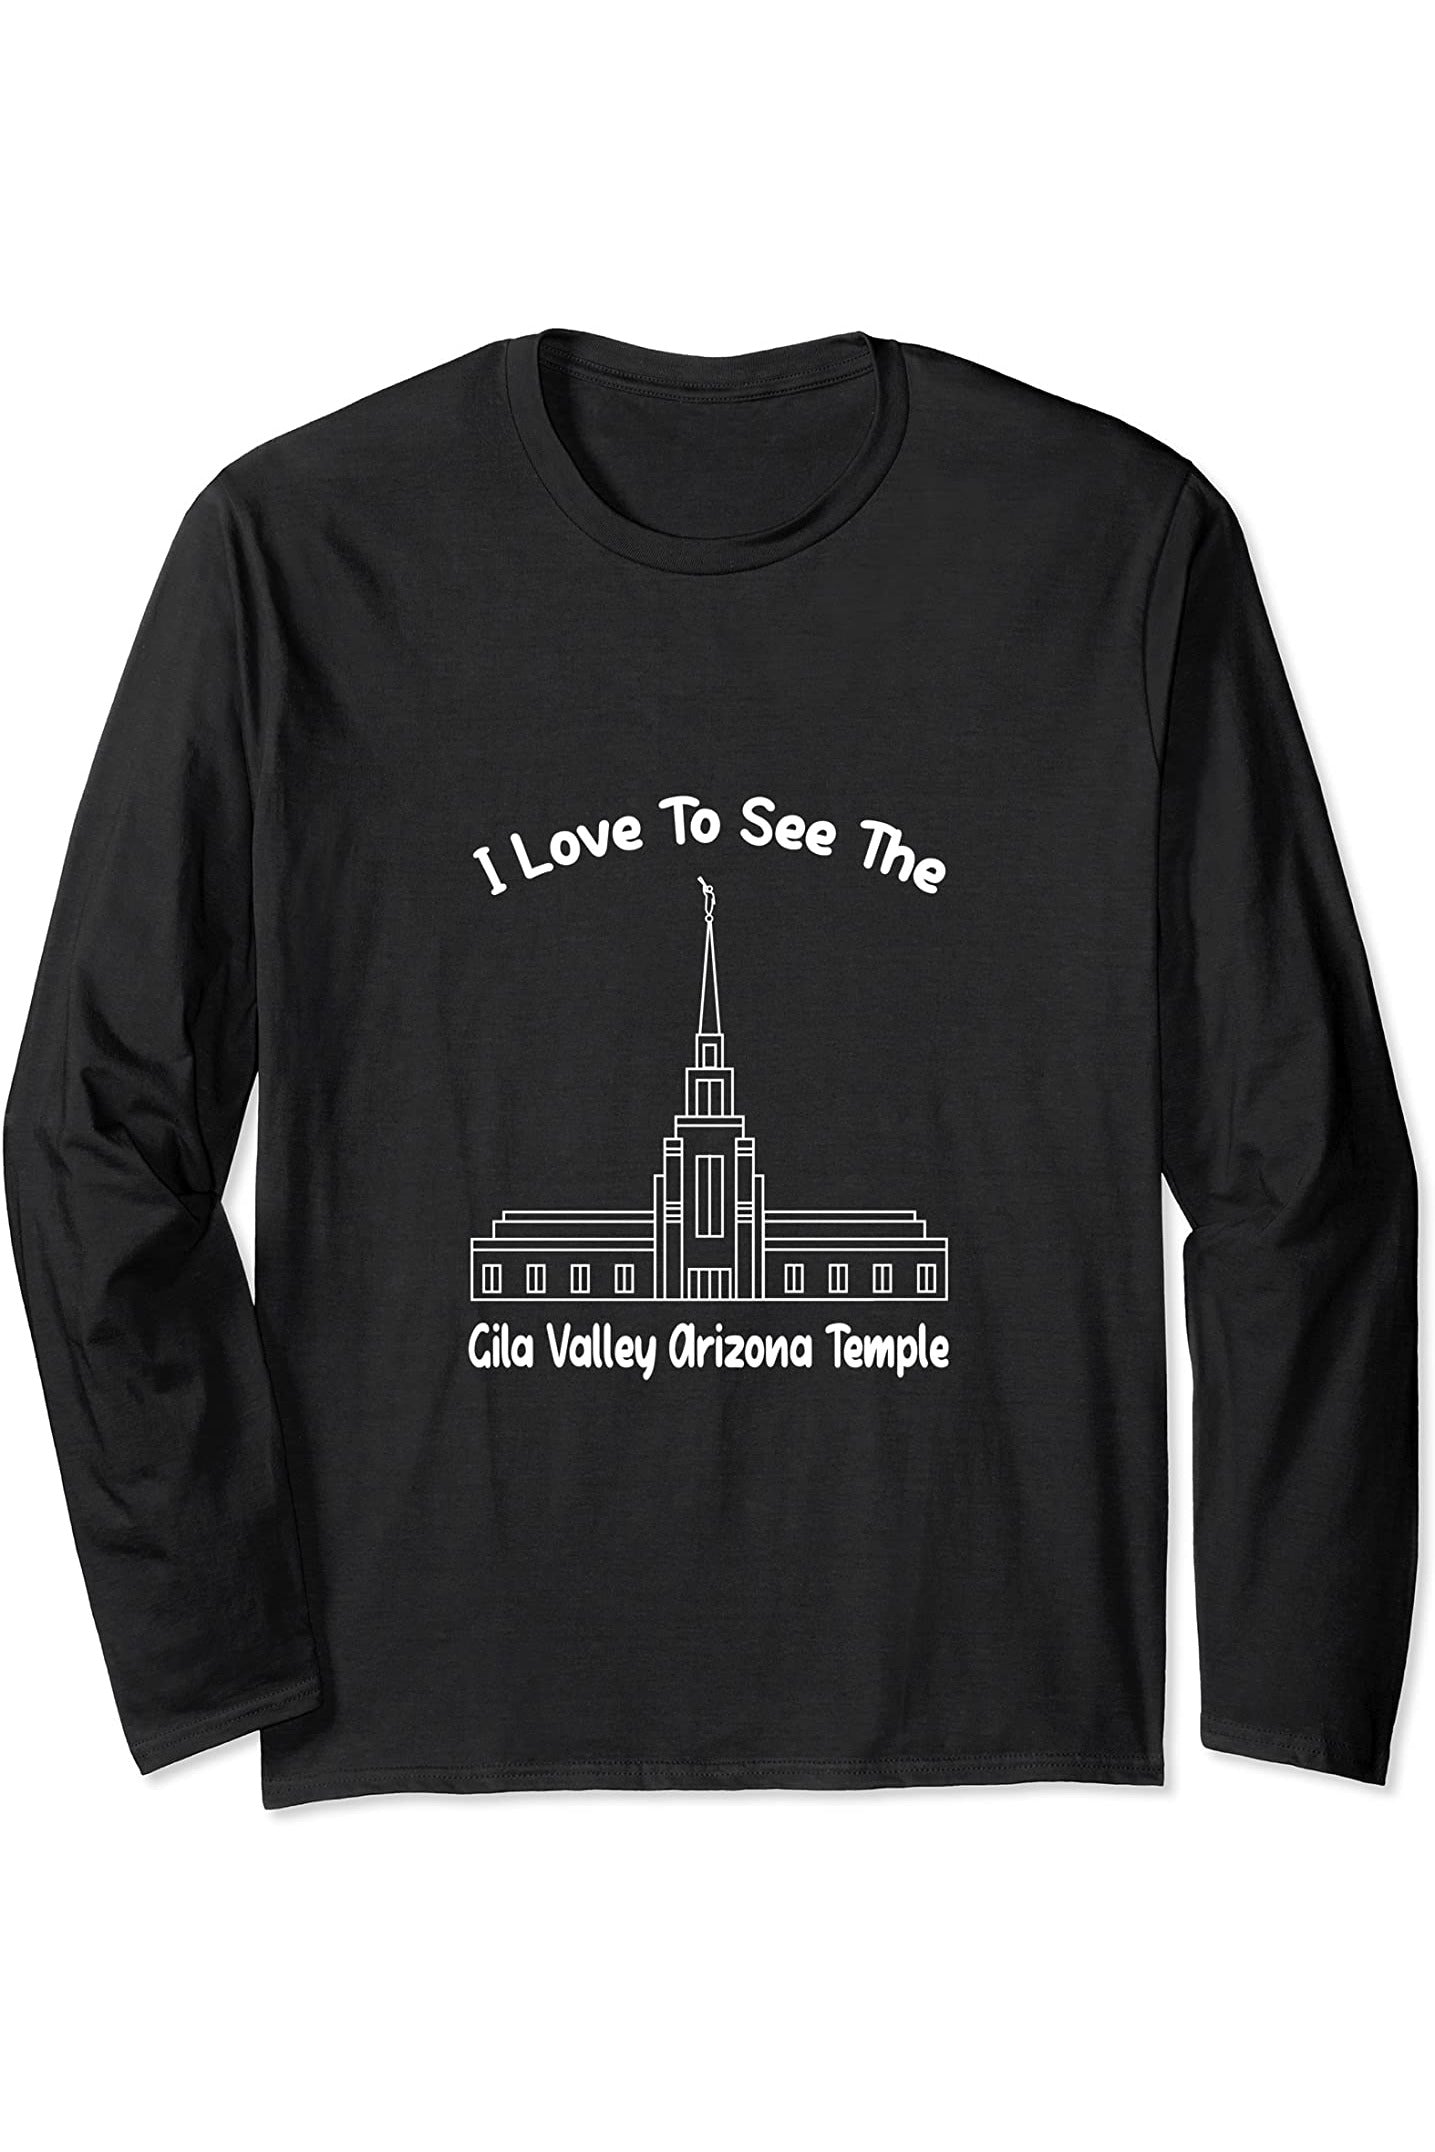 Gila Valley Arizona Temple Long Sleeve T-Shirt - Primary Style (English) US